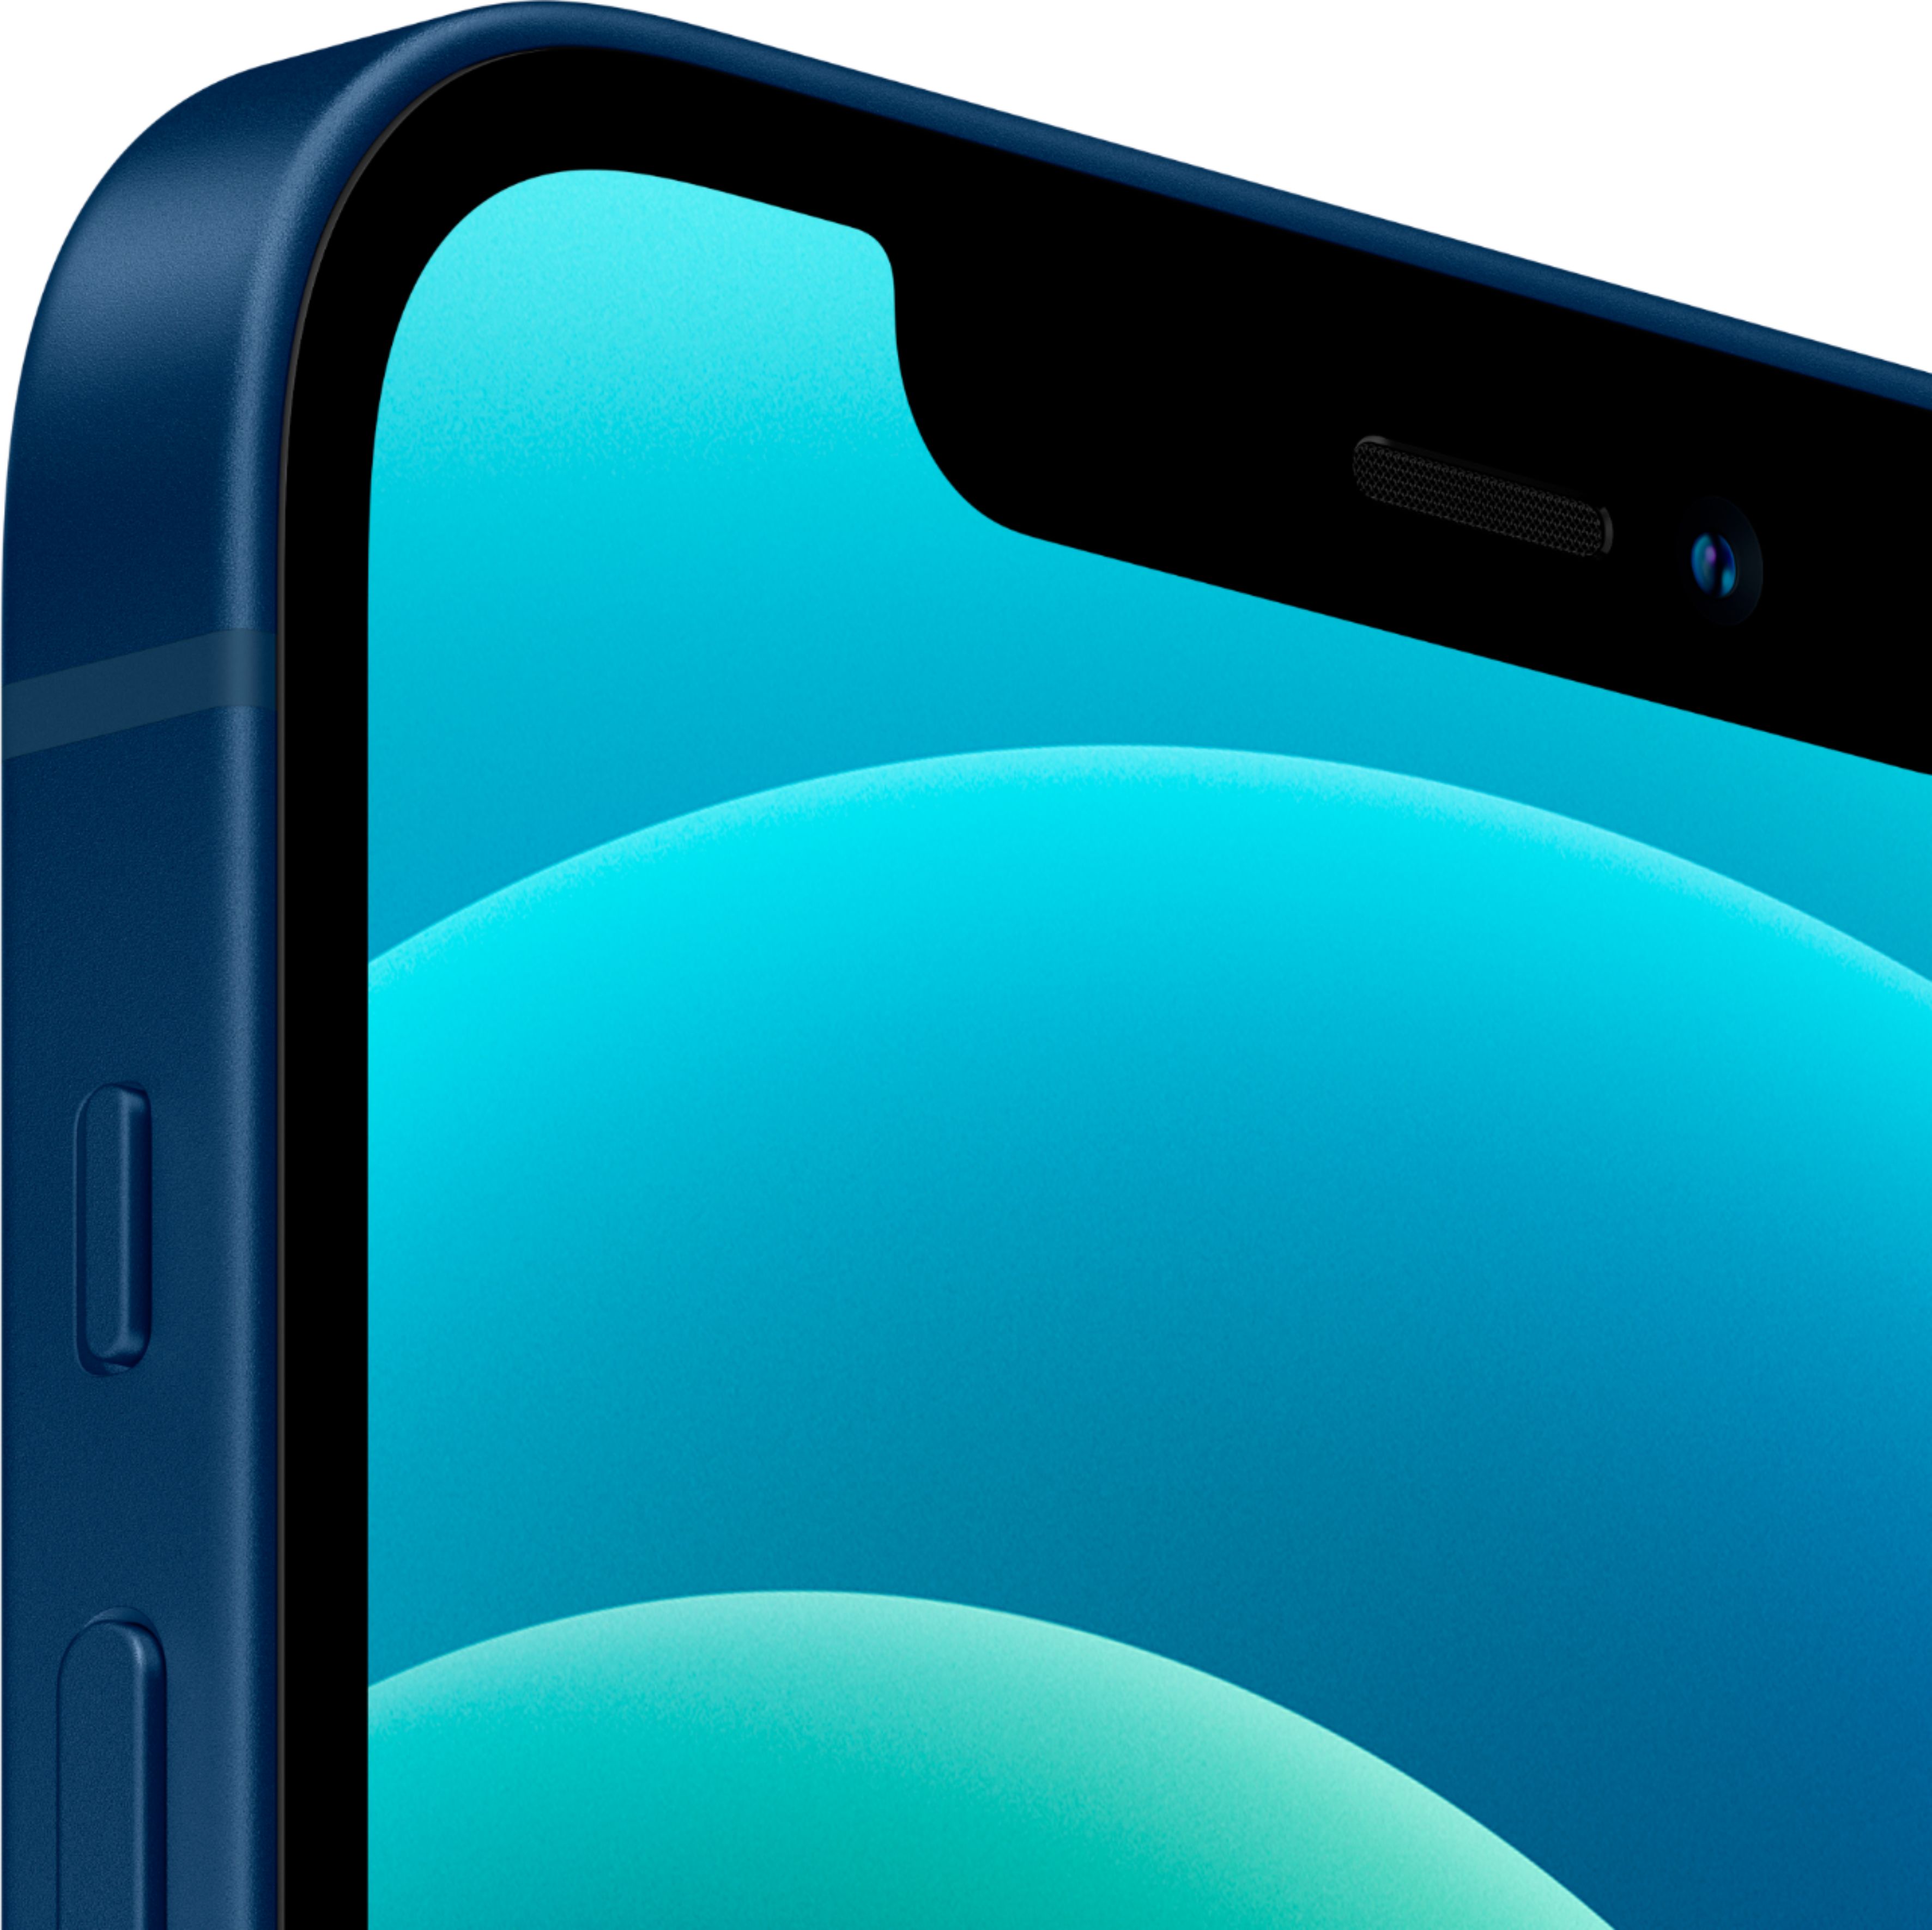 Apple iPhone 12 5G 128GB Blue (Verizon) MGHF3LL/A - Best Buy